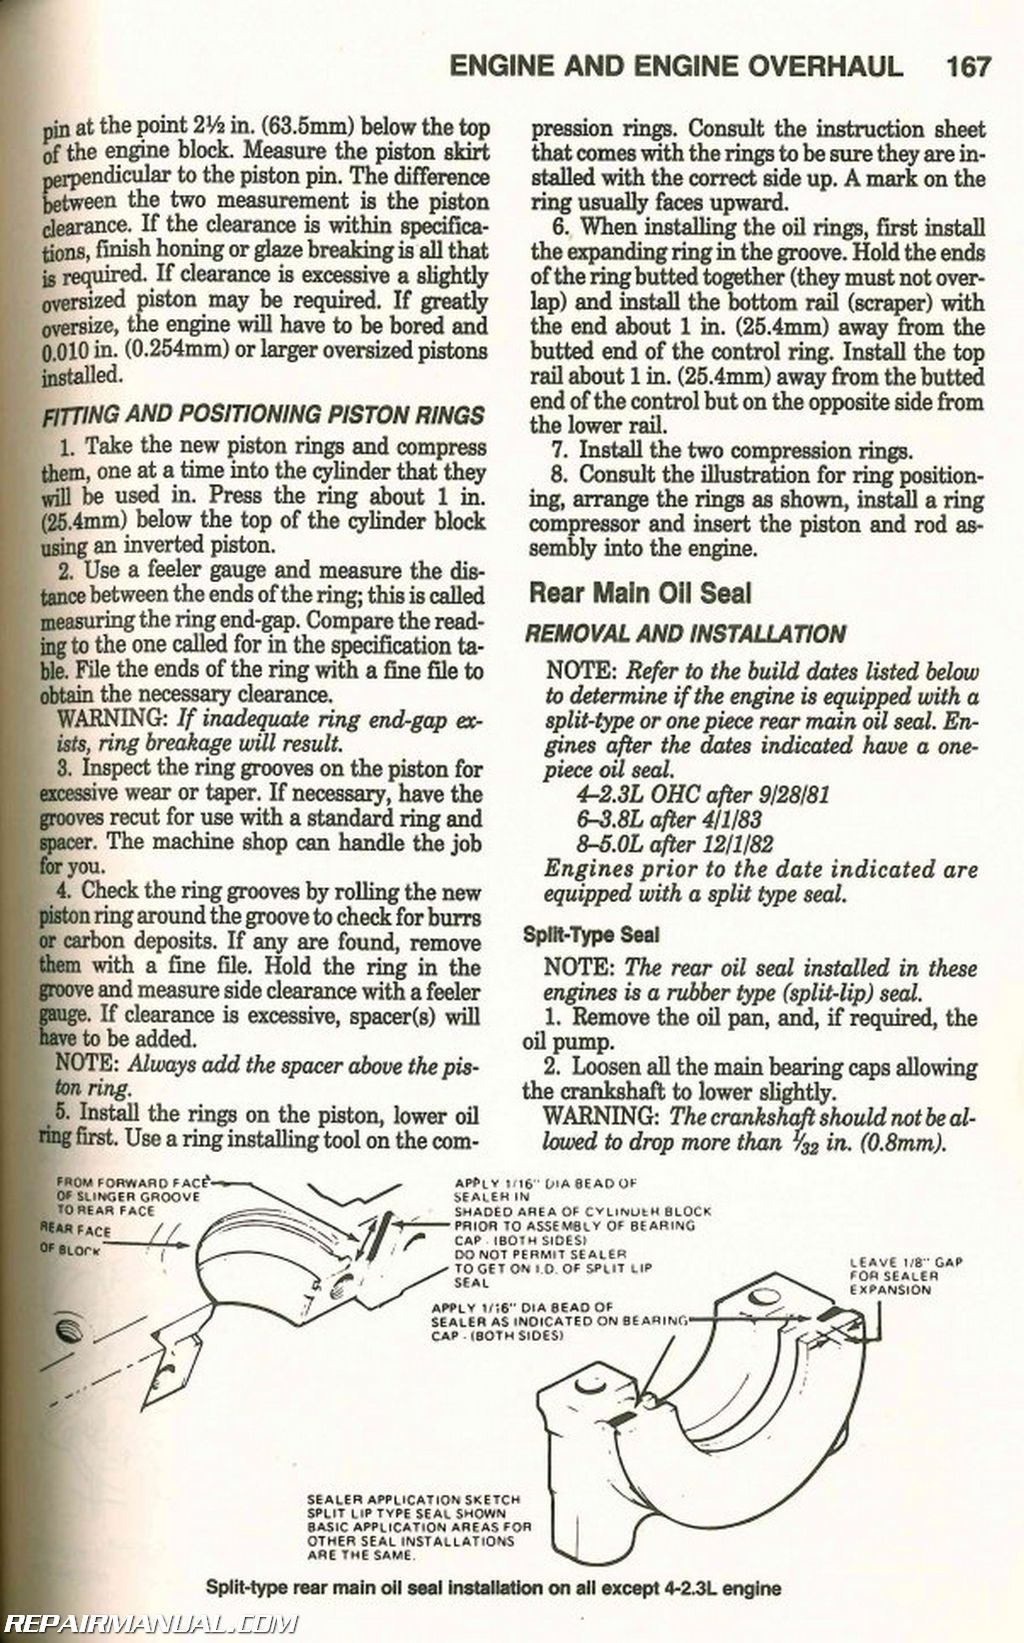 1983-1992 Thunderbird Cou Chilton Repair Service Manual